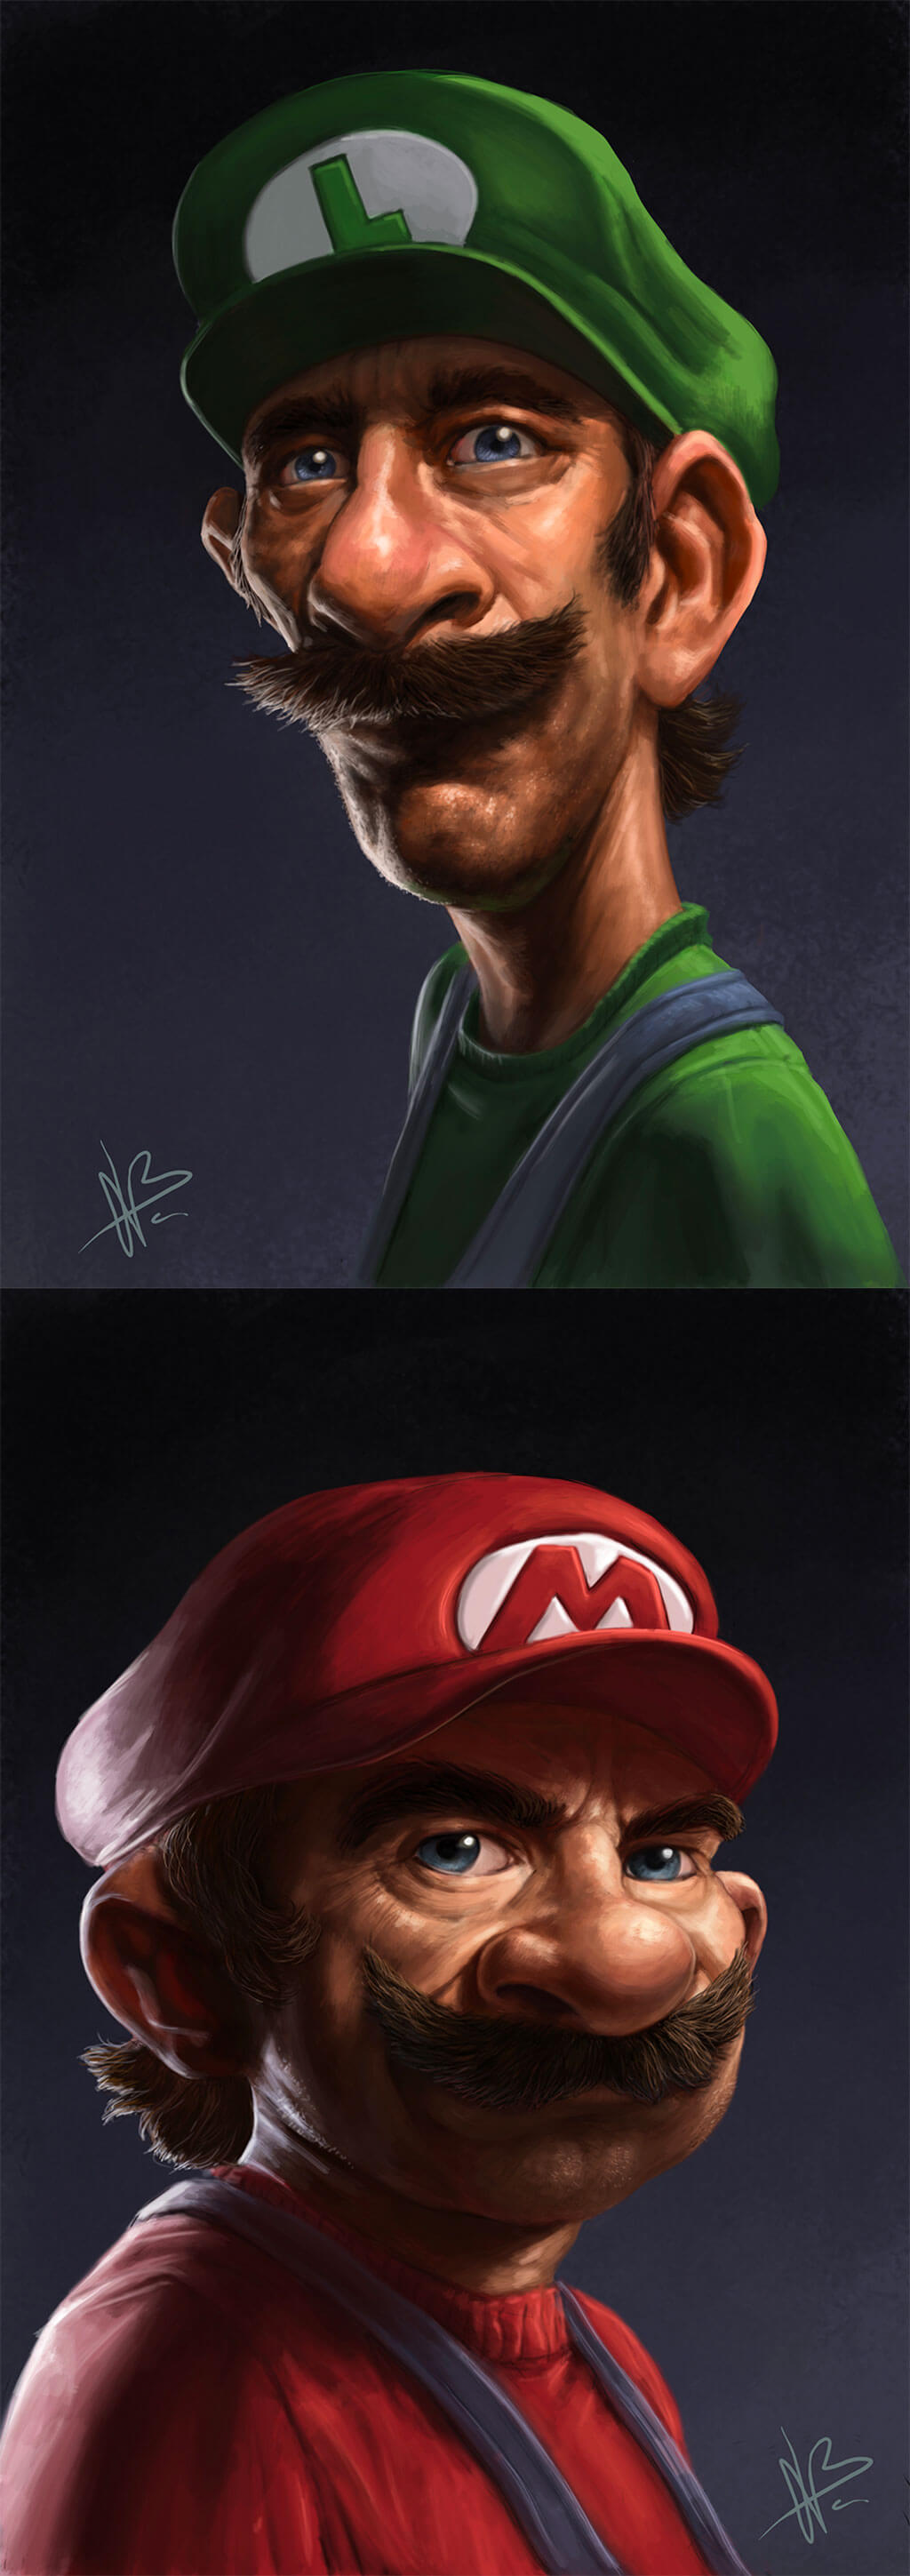 Mario Fan Art by Nuño Benito